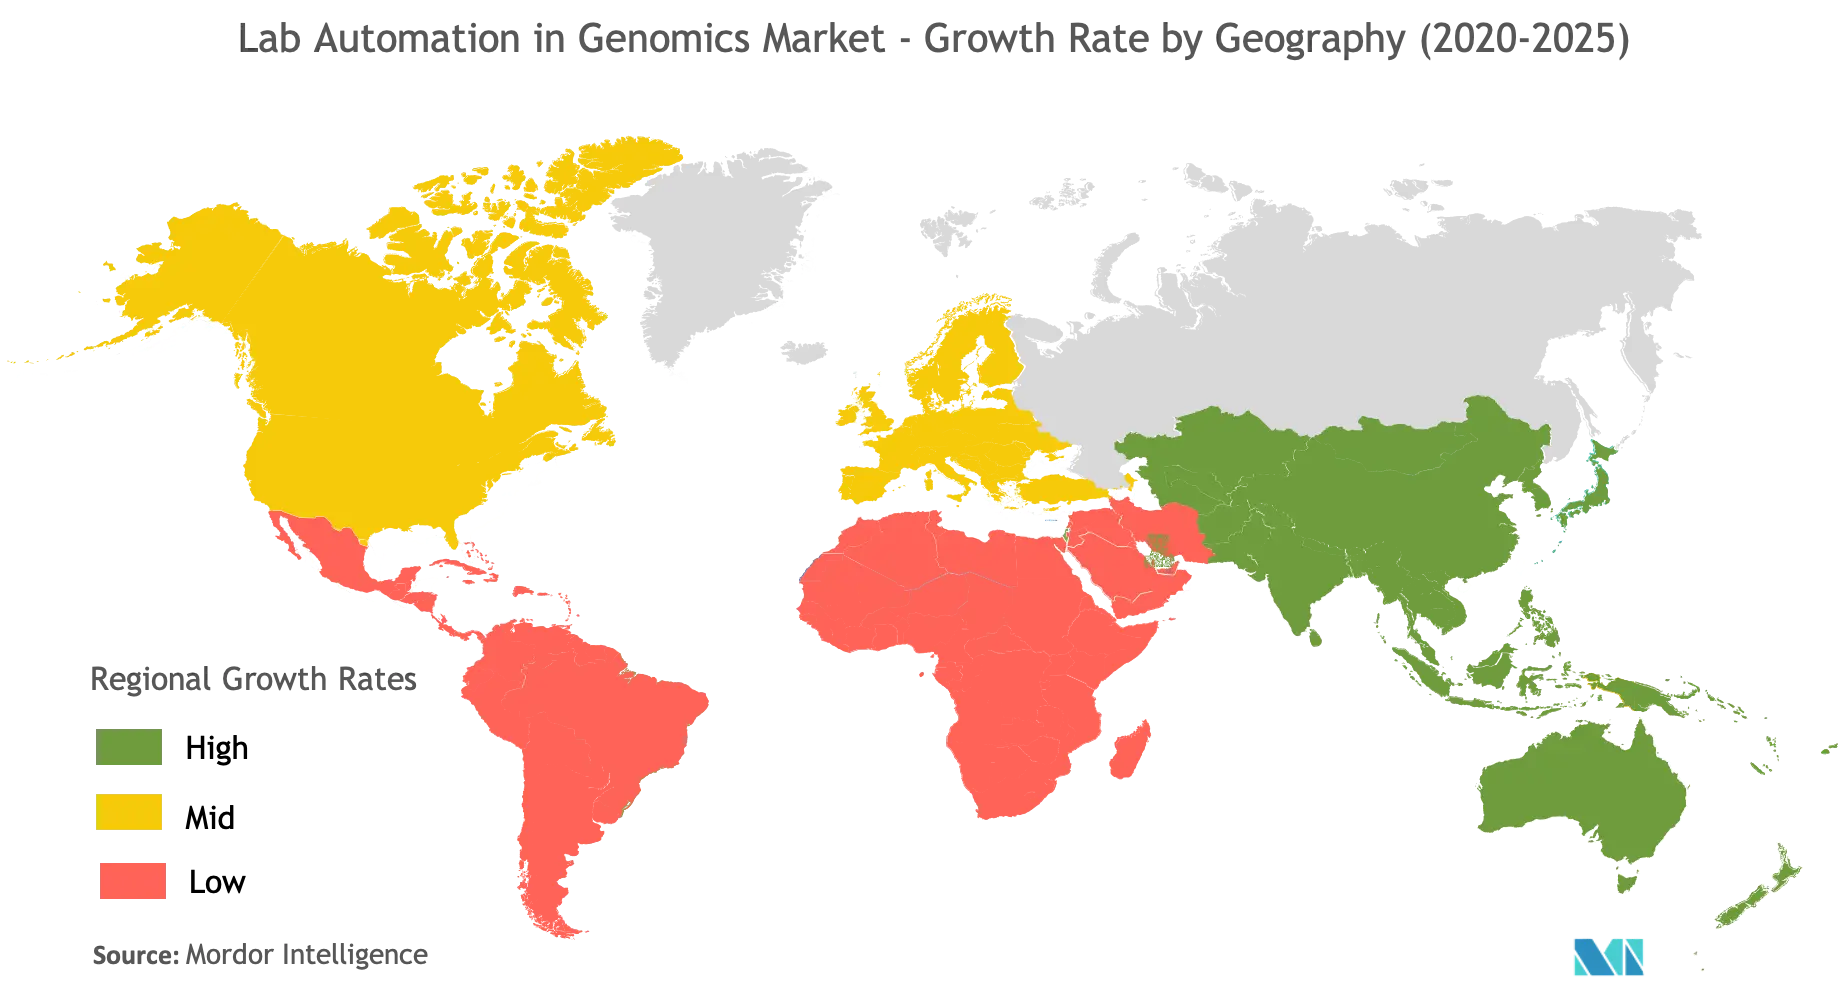  digital genome market analysis